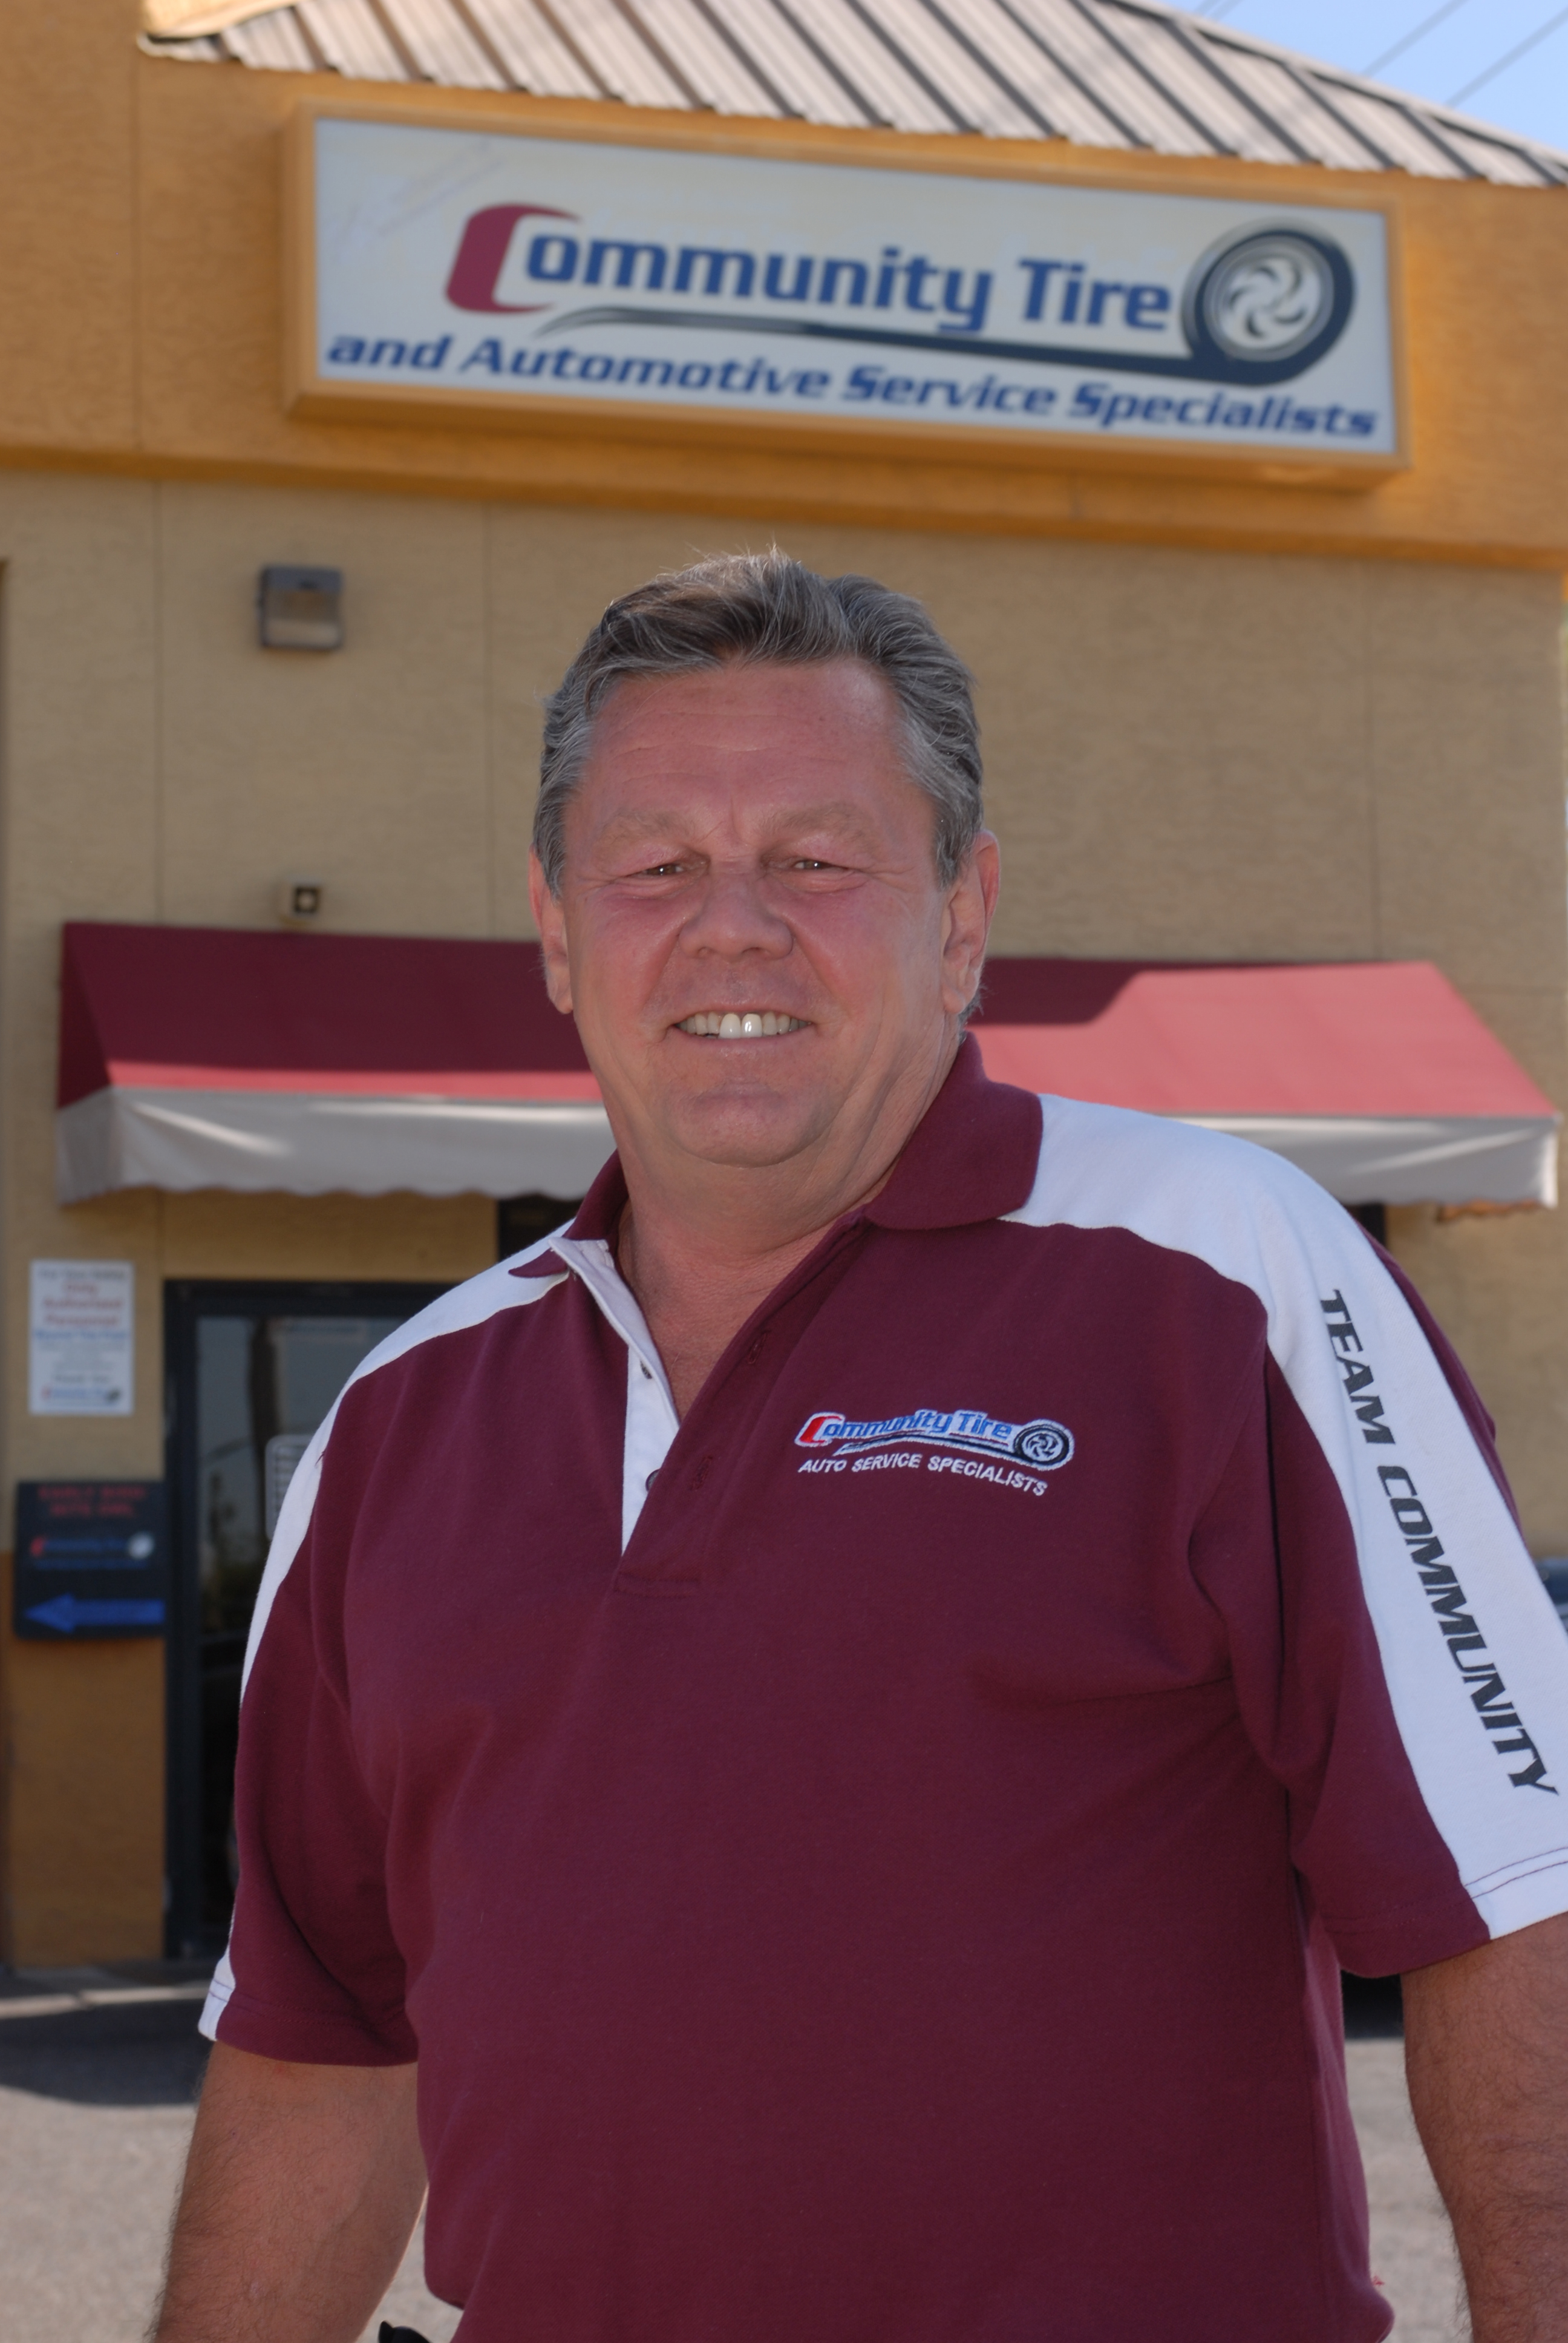 Howard J. Fleischmann Sr., Owner, Community Tire and Automotive Service Specialists.